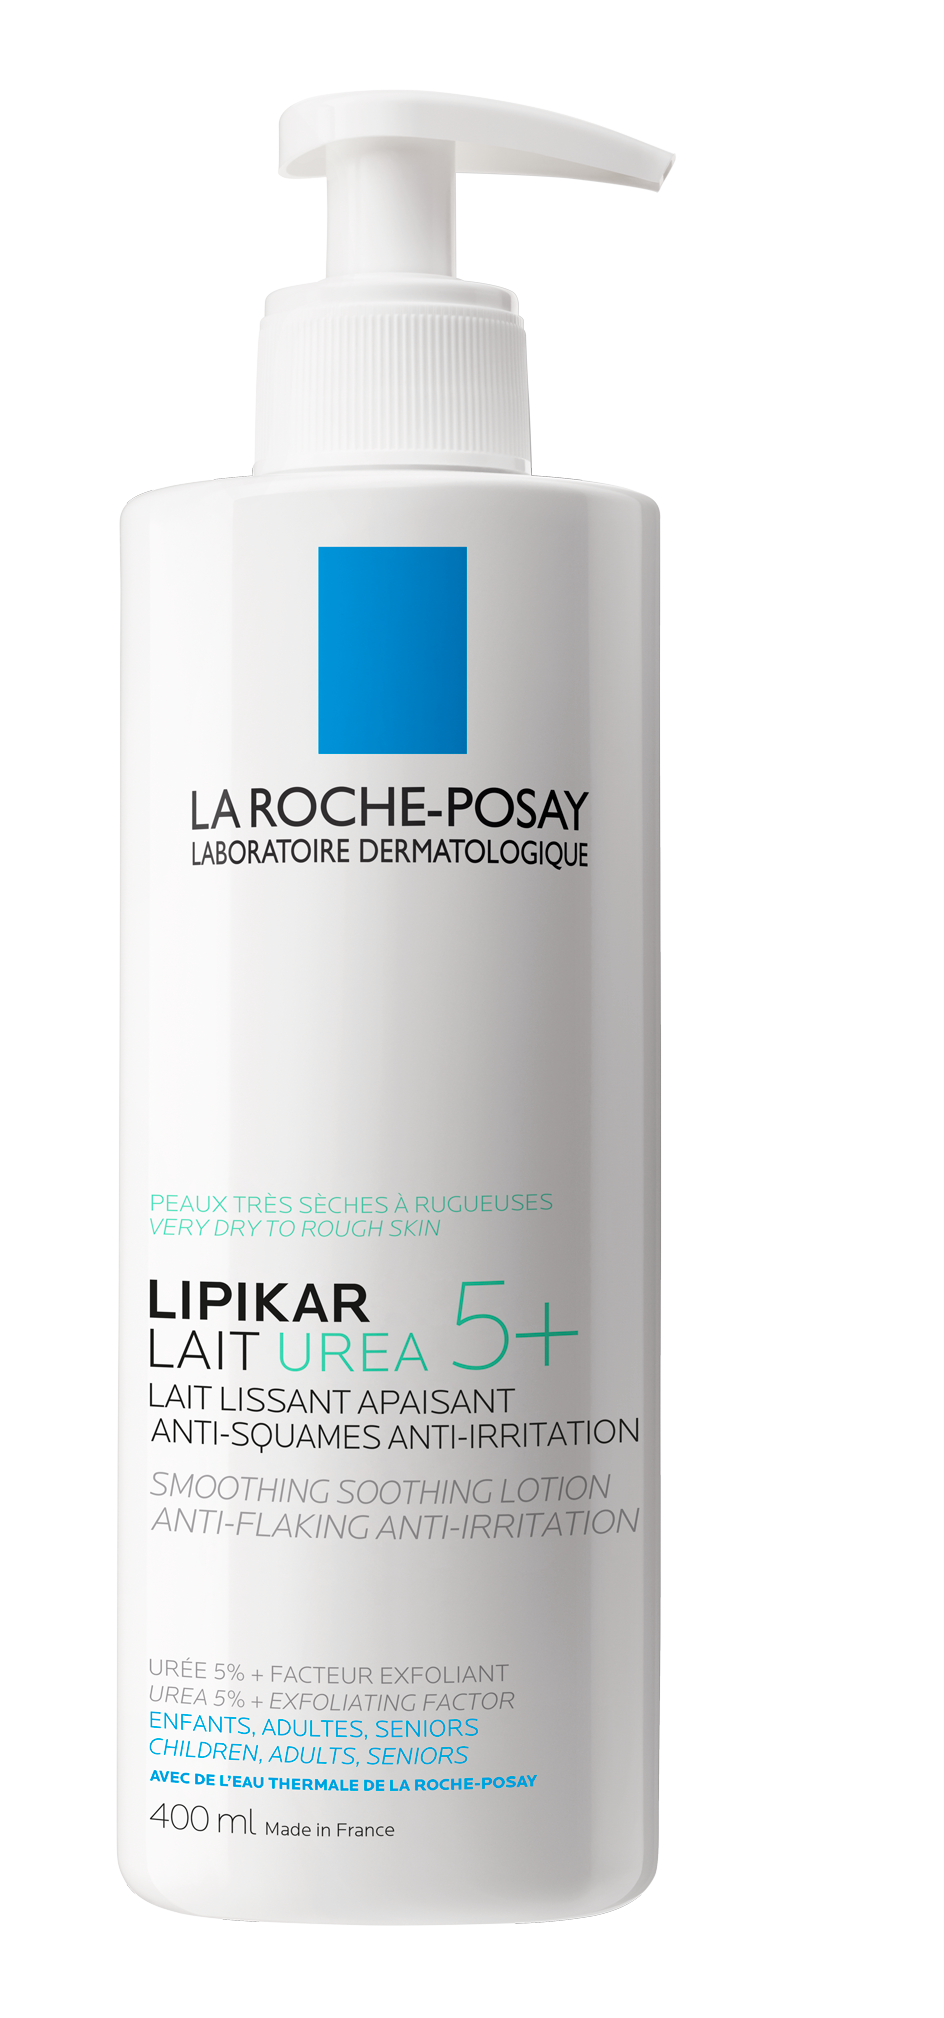 La Roche-Posay Lipikar Lait Urea 5+